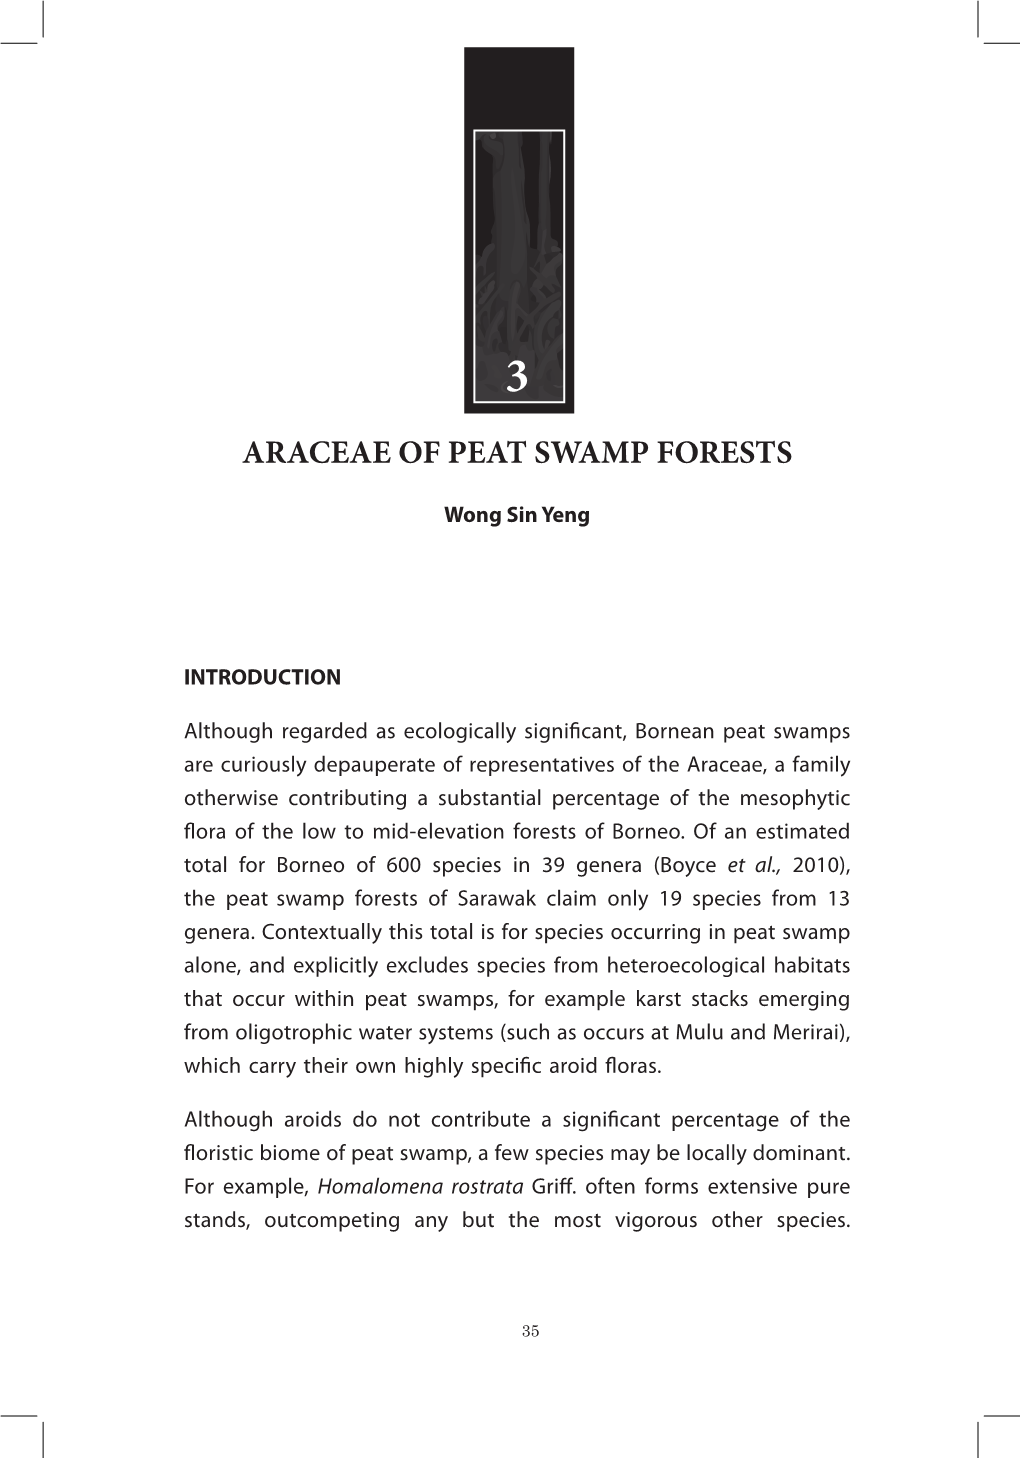 Araceae of Peat Swamp Forests